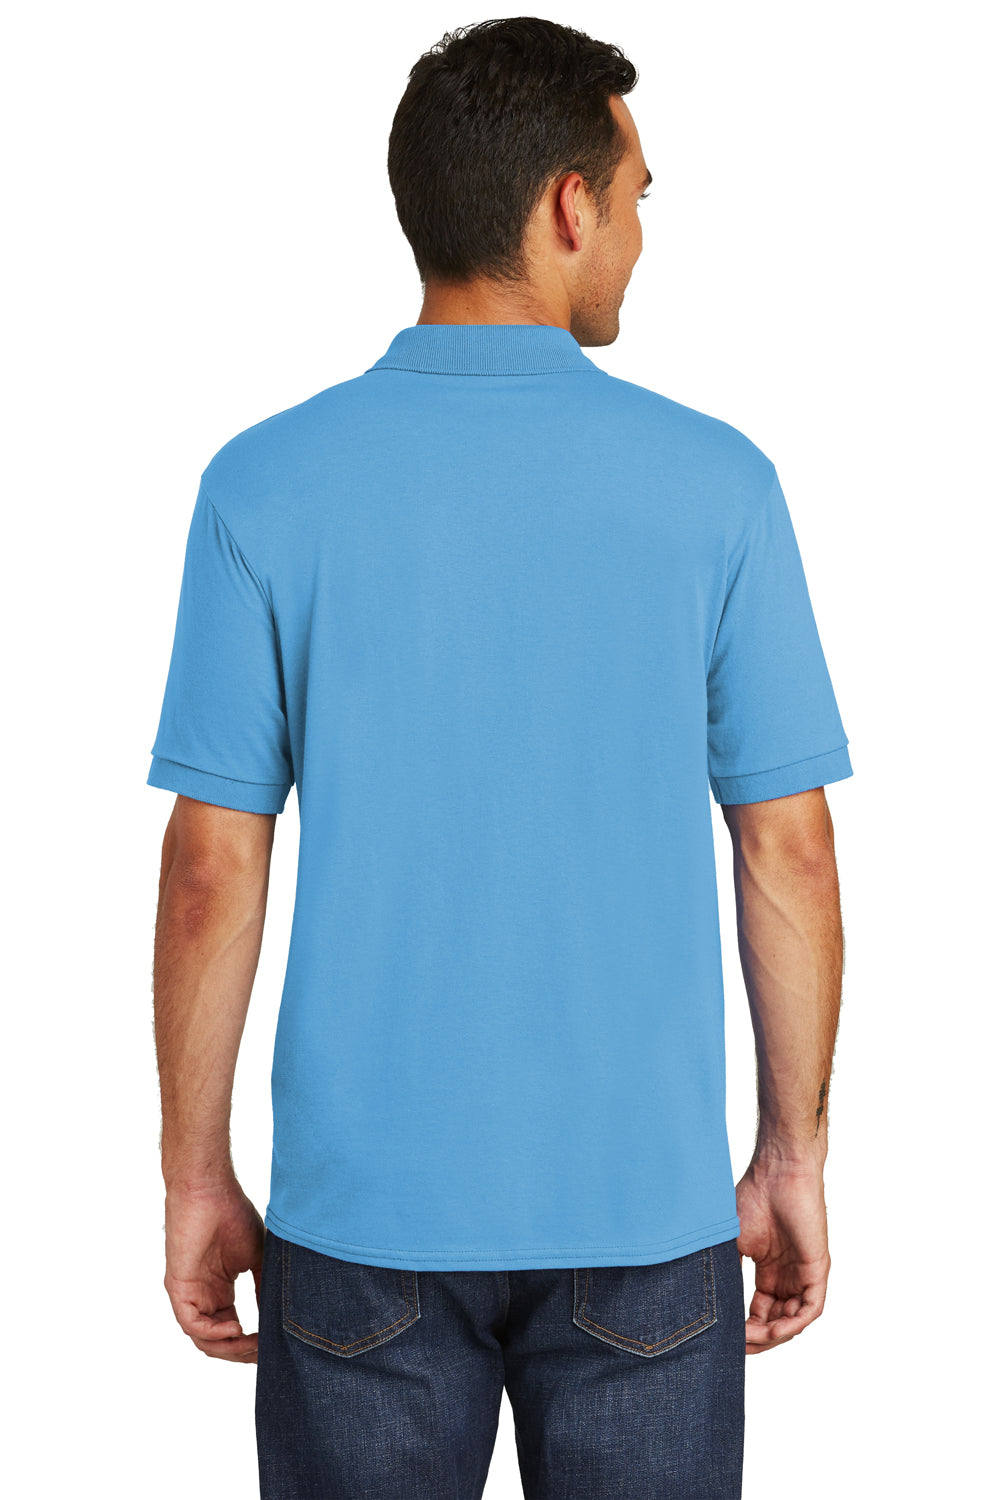 Port & Company KP55 Mens Core Stain Resistant Short Sleeve Polo Shirt Aqua Blue Back